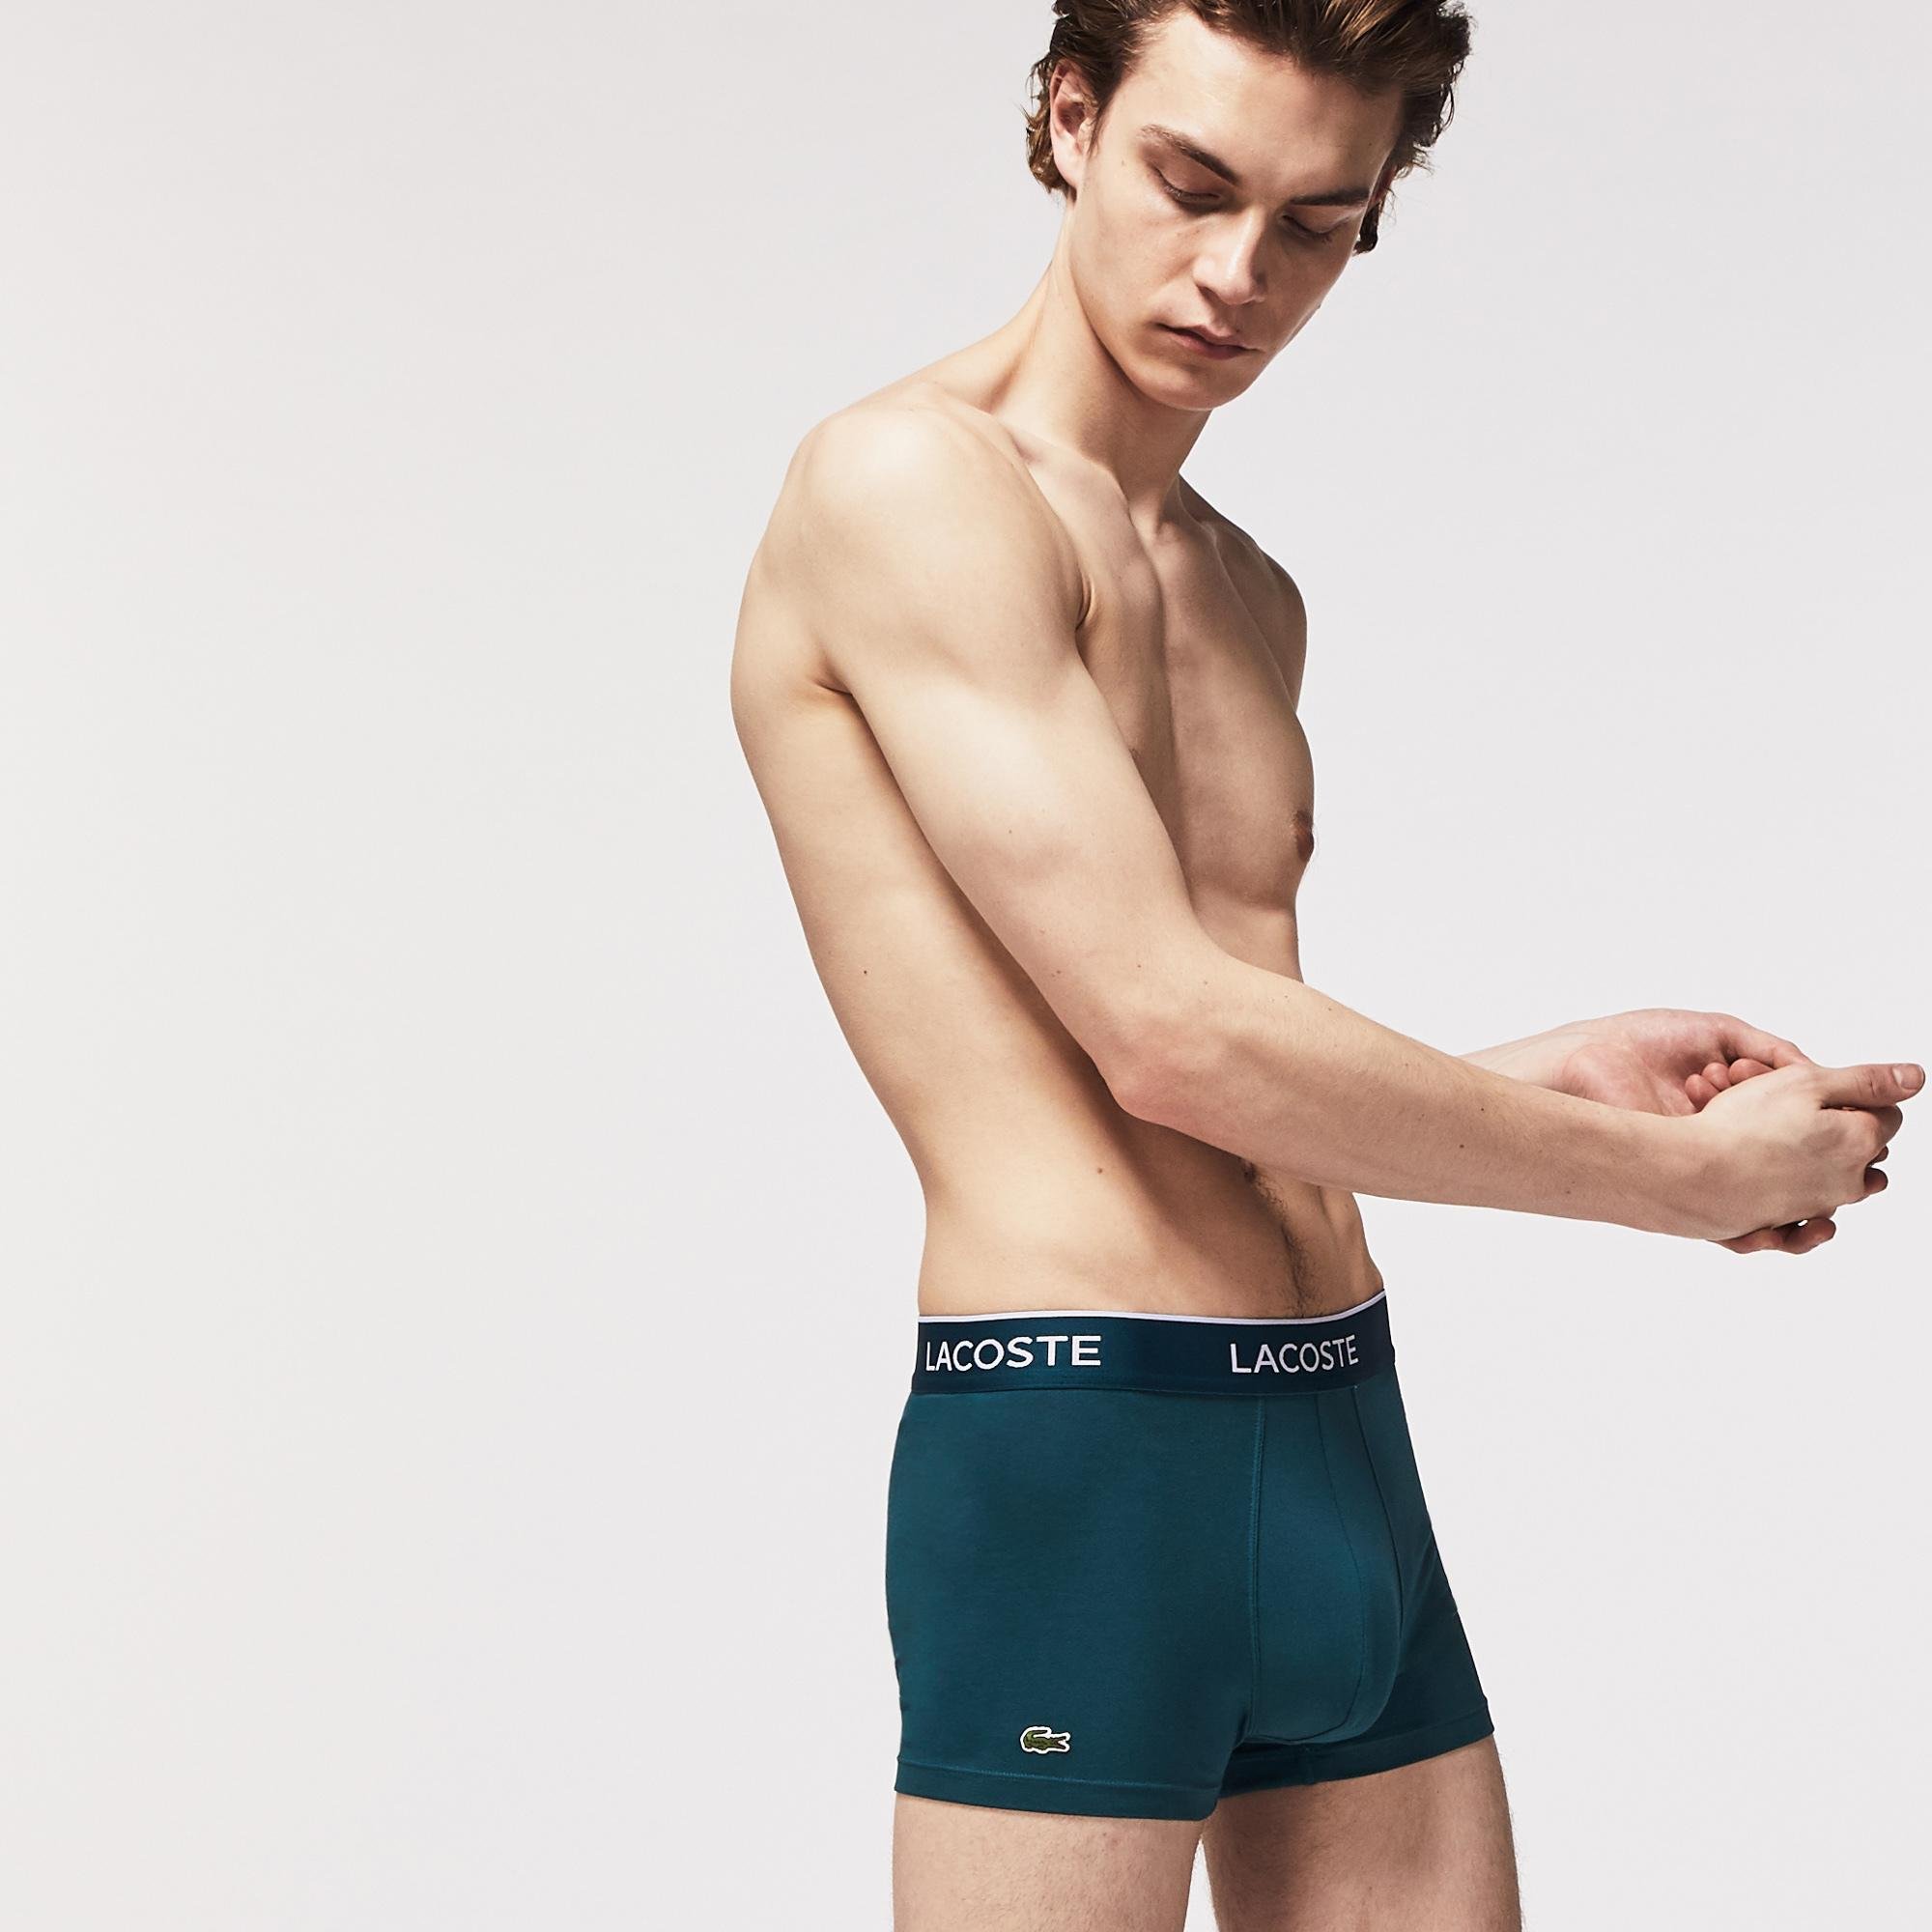 Buy Men's Lacoste Underwear Online